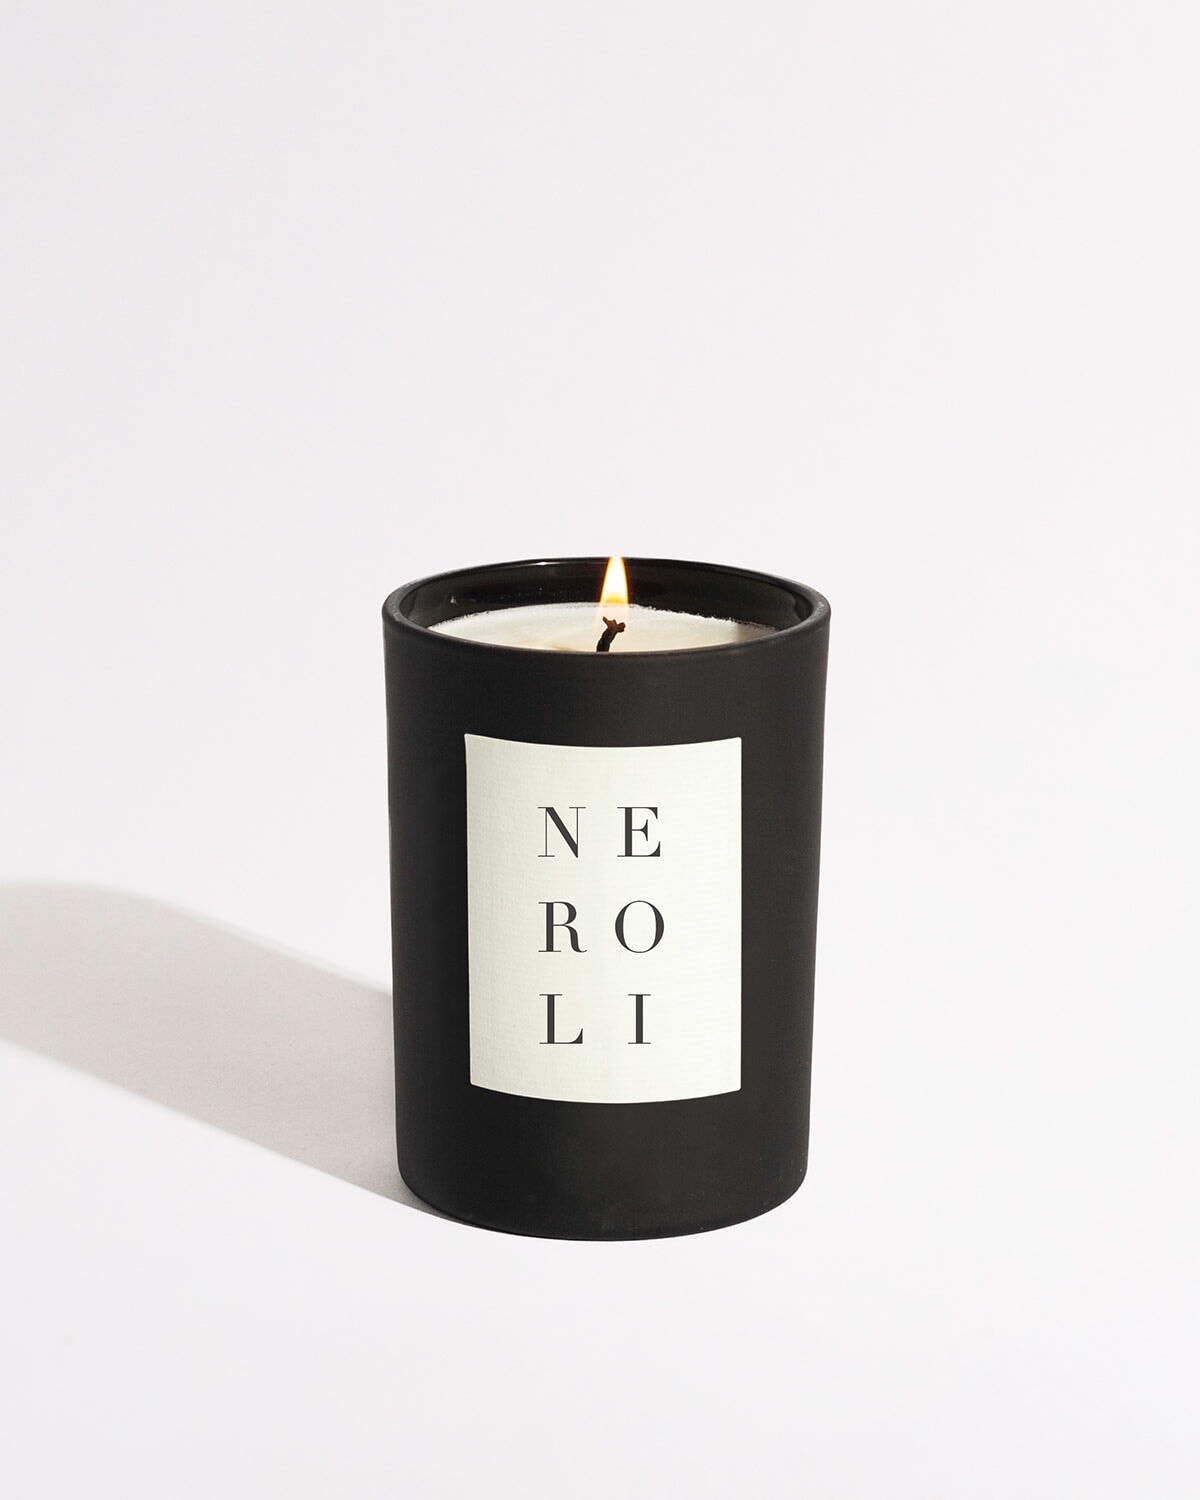 Neroli Noir Candle by Brooklyn Candle Studio